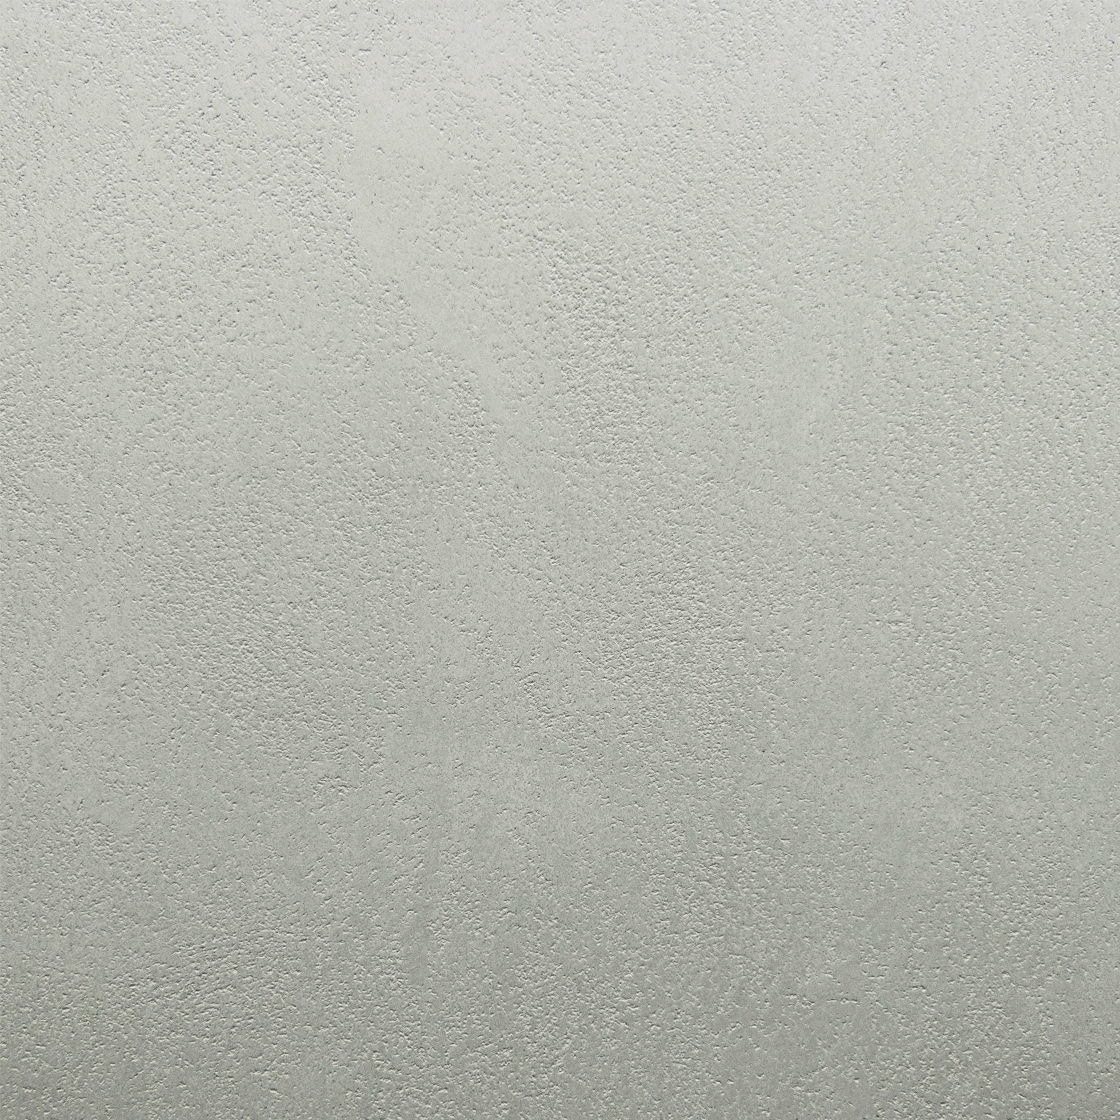 Close up of Armourcoat leatherstone exterior polished plaster finish - 70